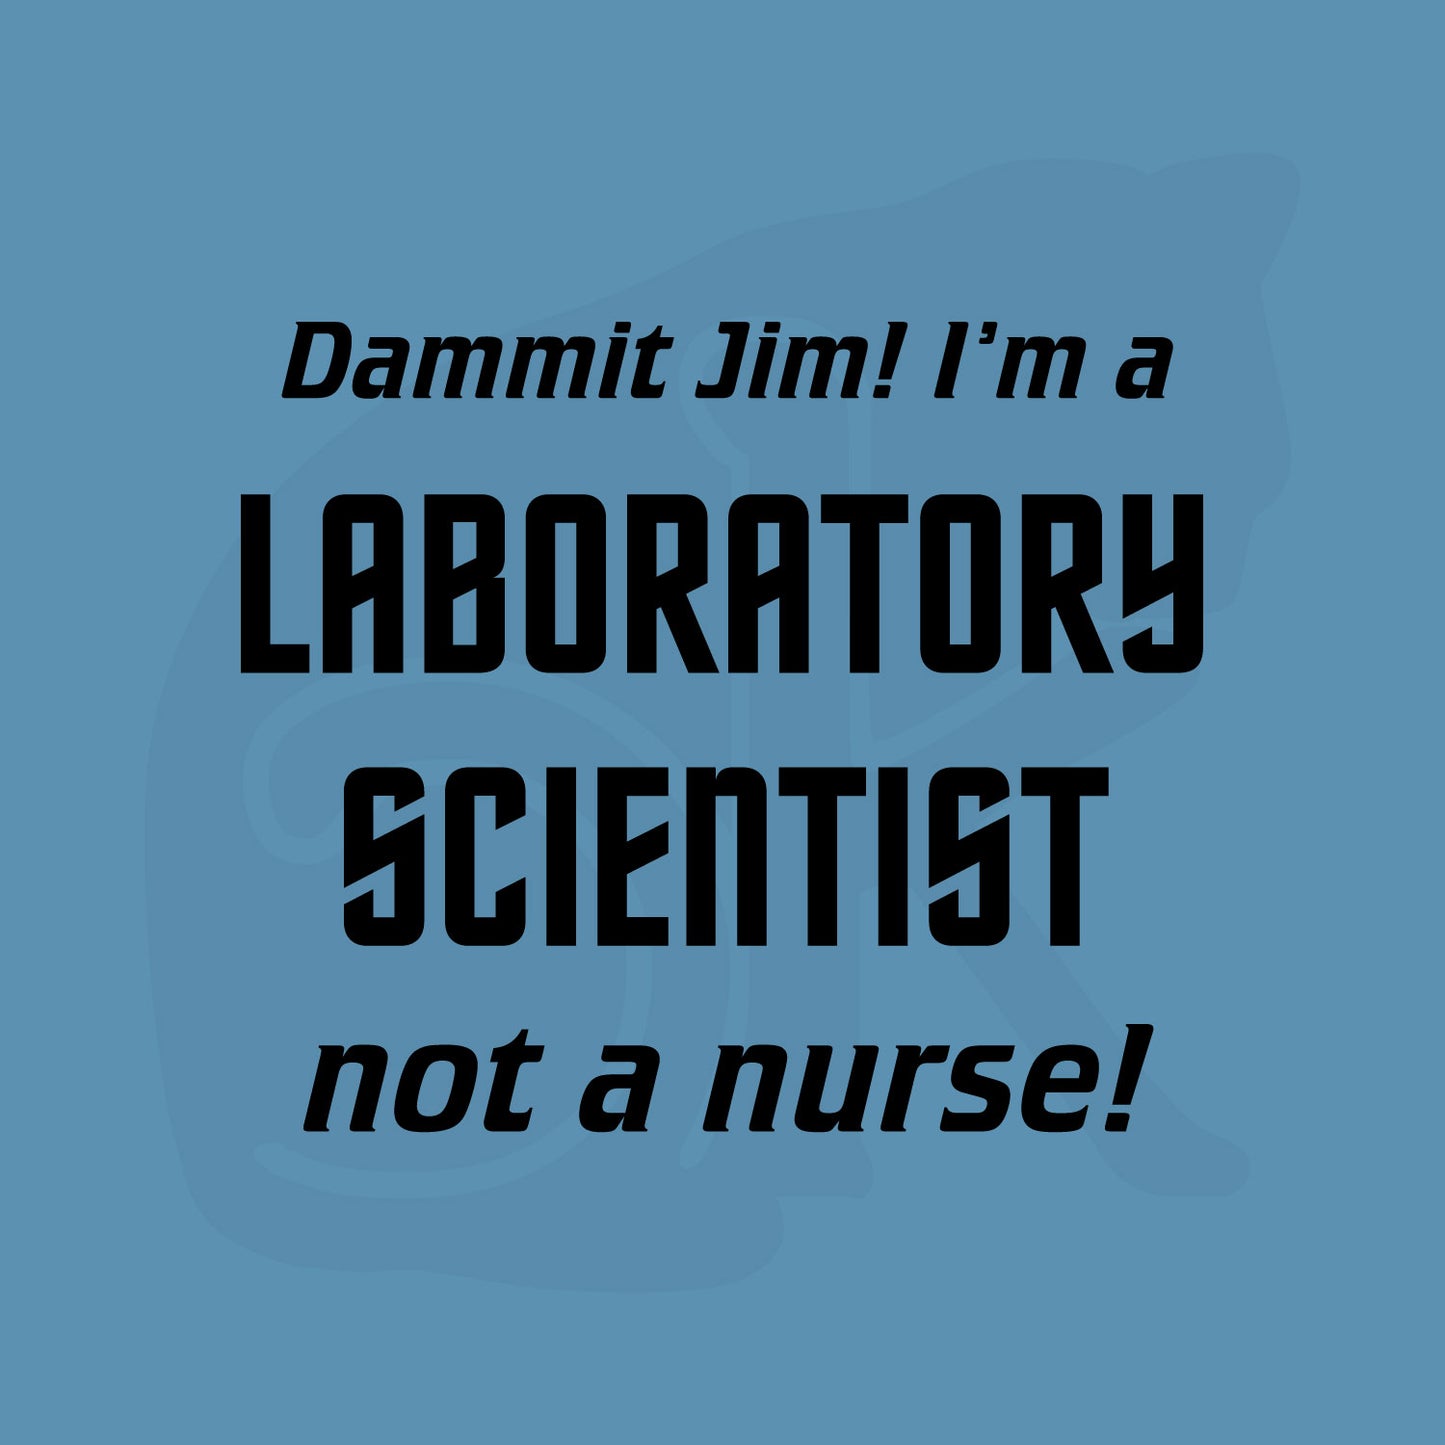 Standalone watermarked graphic in Star Trek font: "Dammit Jim! I'm a LABORATORY SCIENTIST not a nurse!"